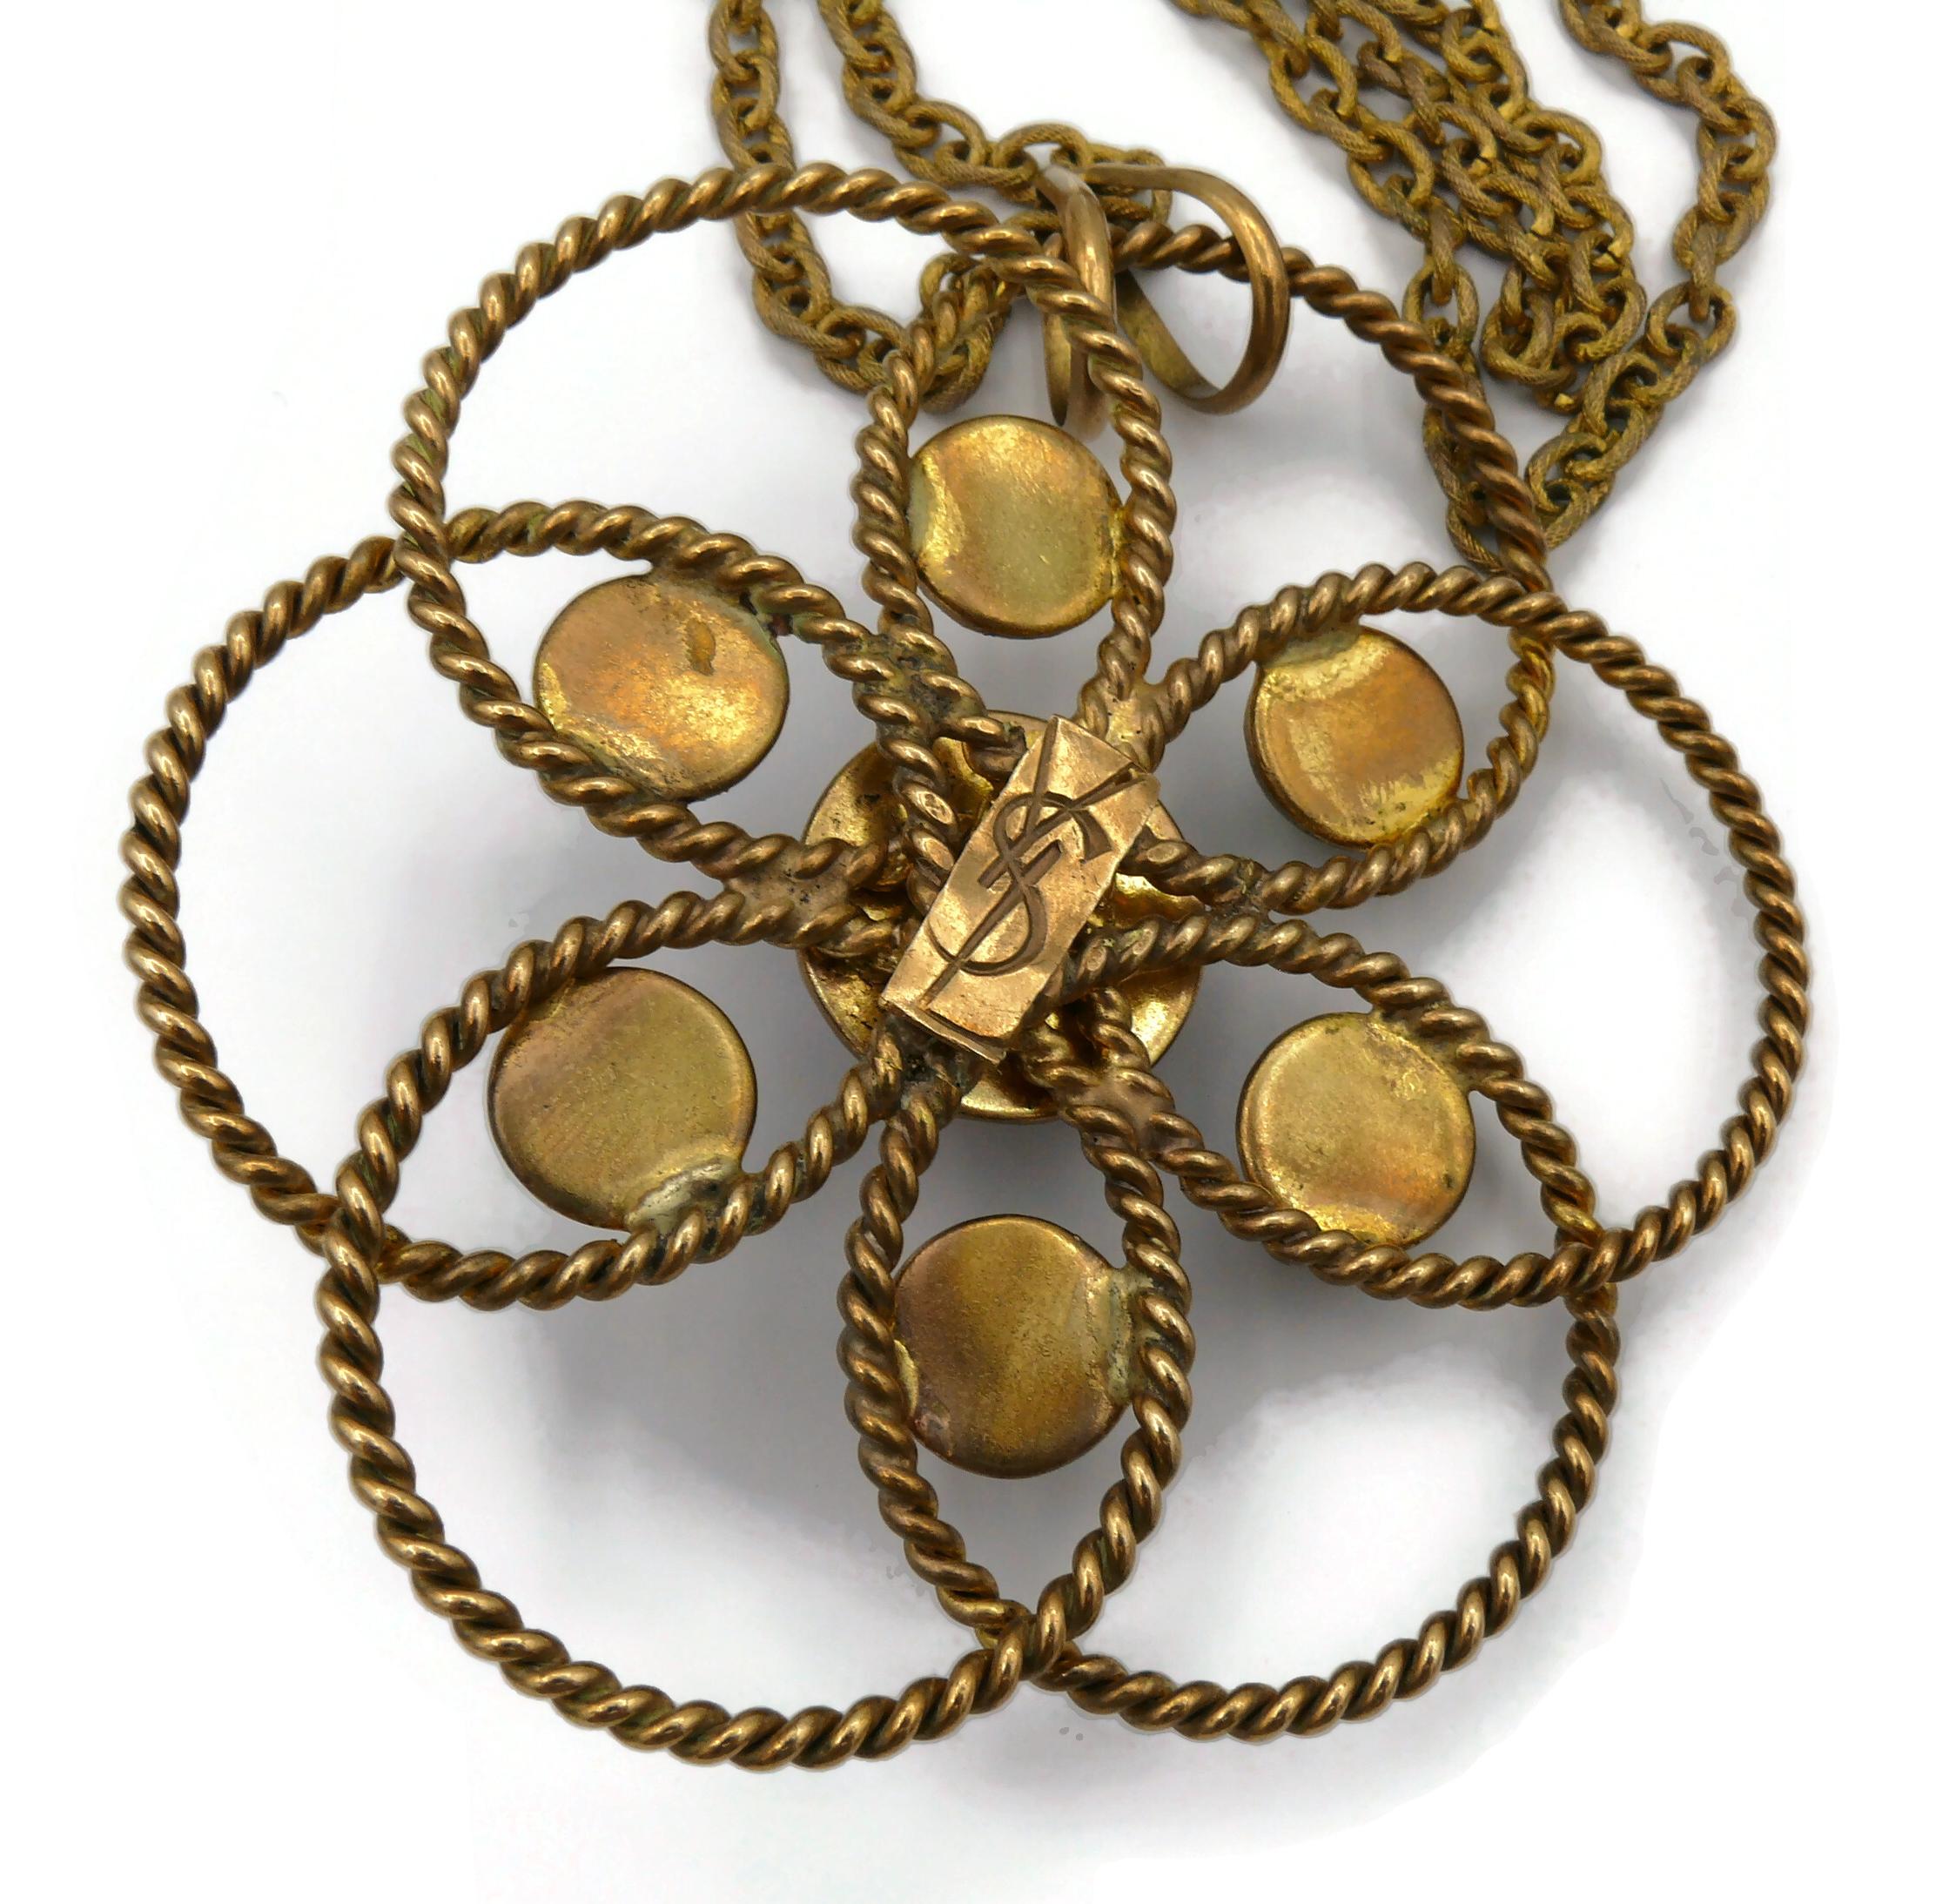 YVES SAINT LAURENT by ROGER SCEMAMA Vintage Massive Flower Pendant Necklace 14